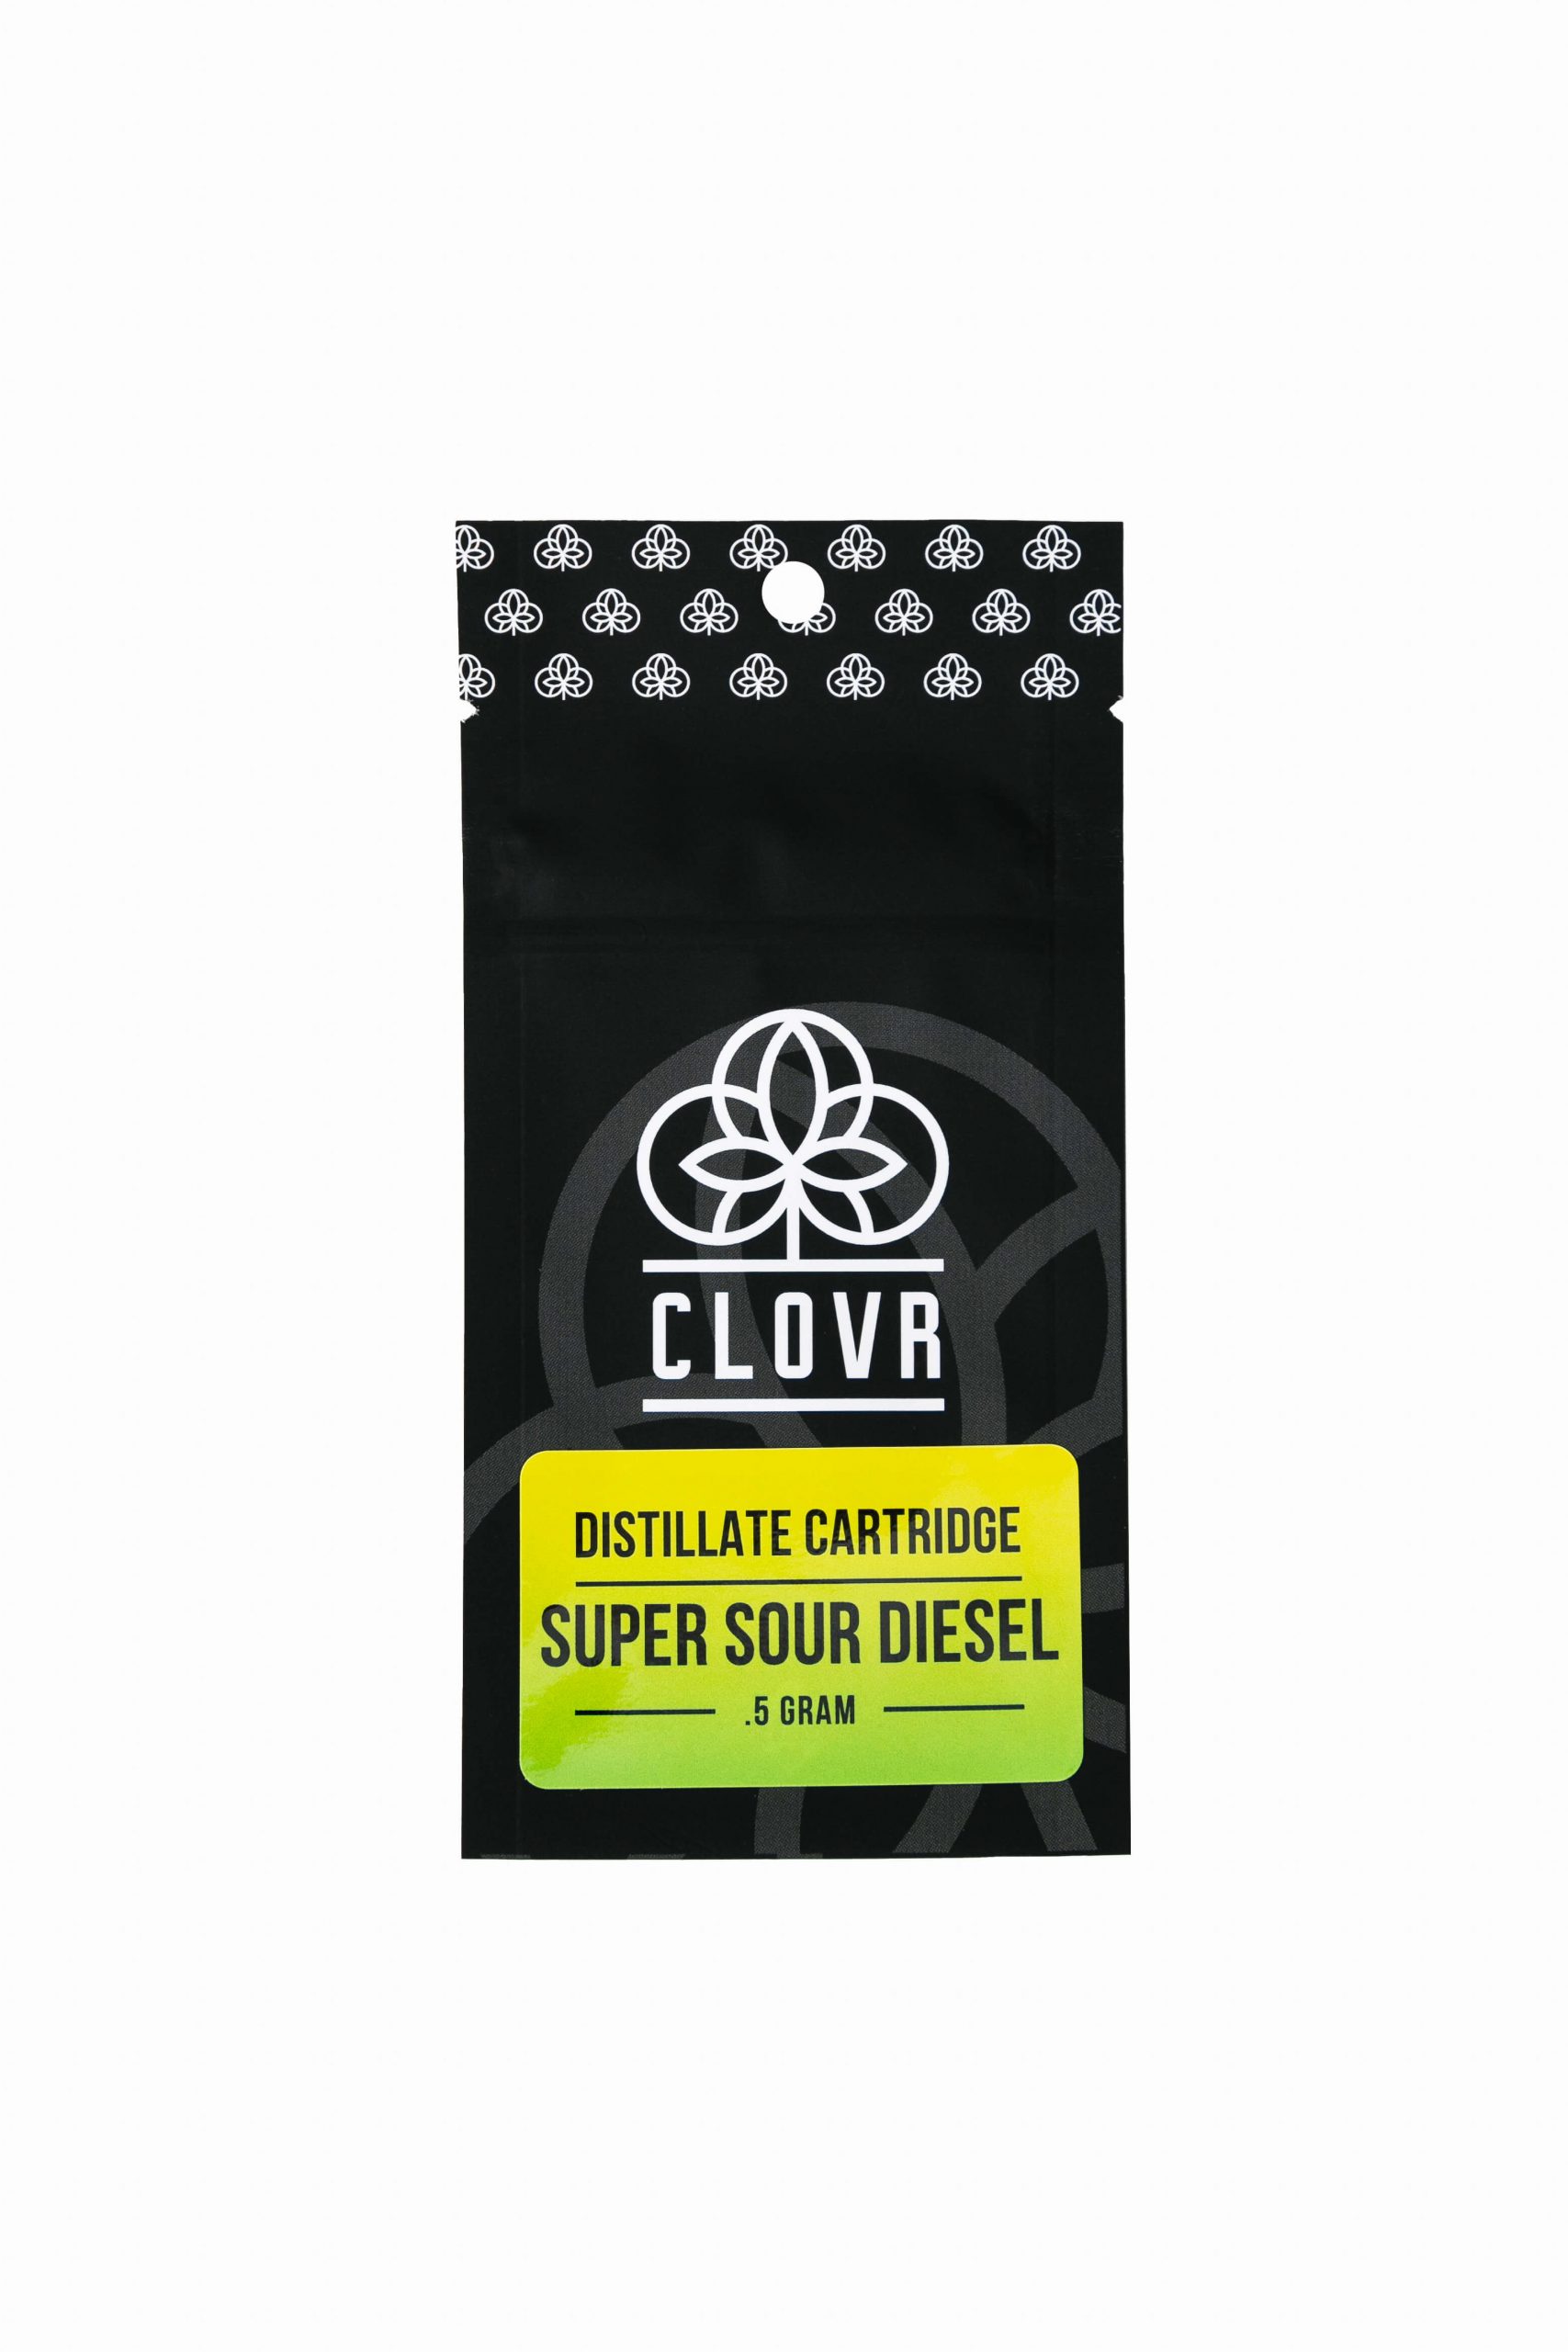 clovr marijuana distillate cartridge super sour diesel packaging